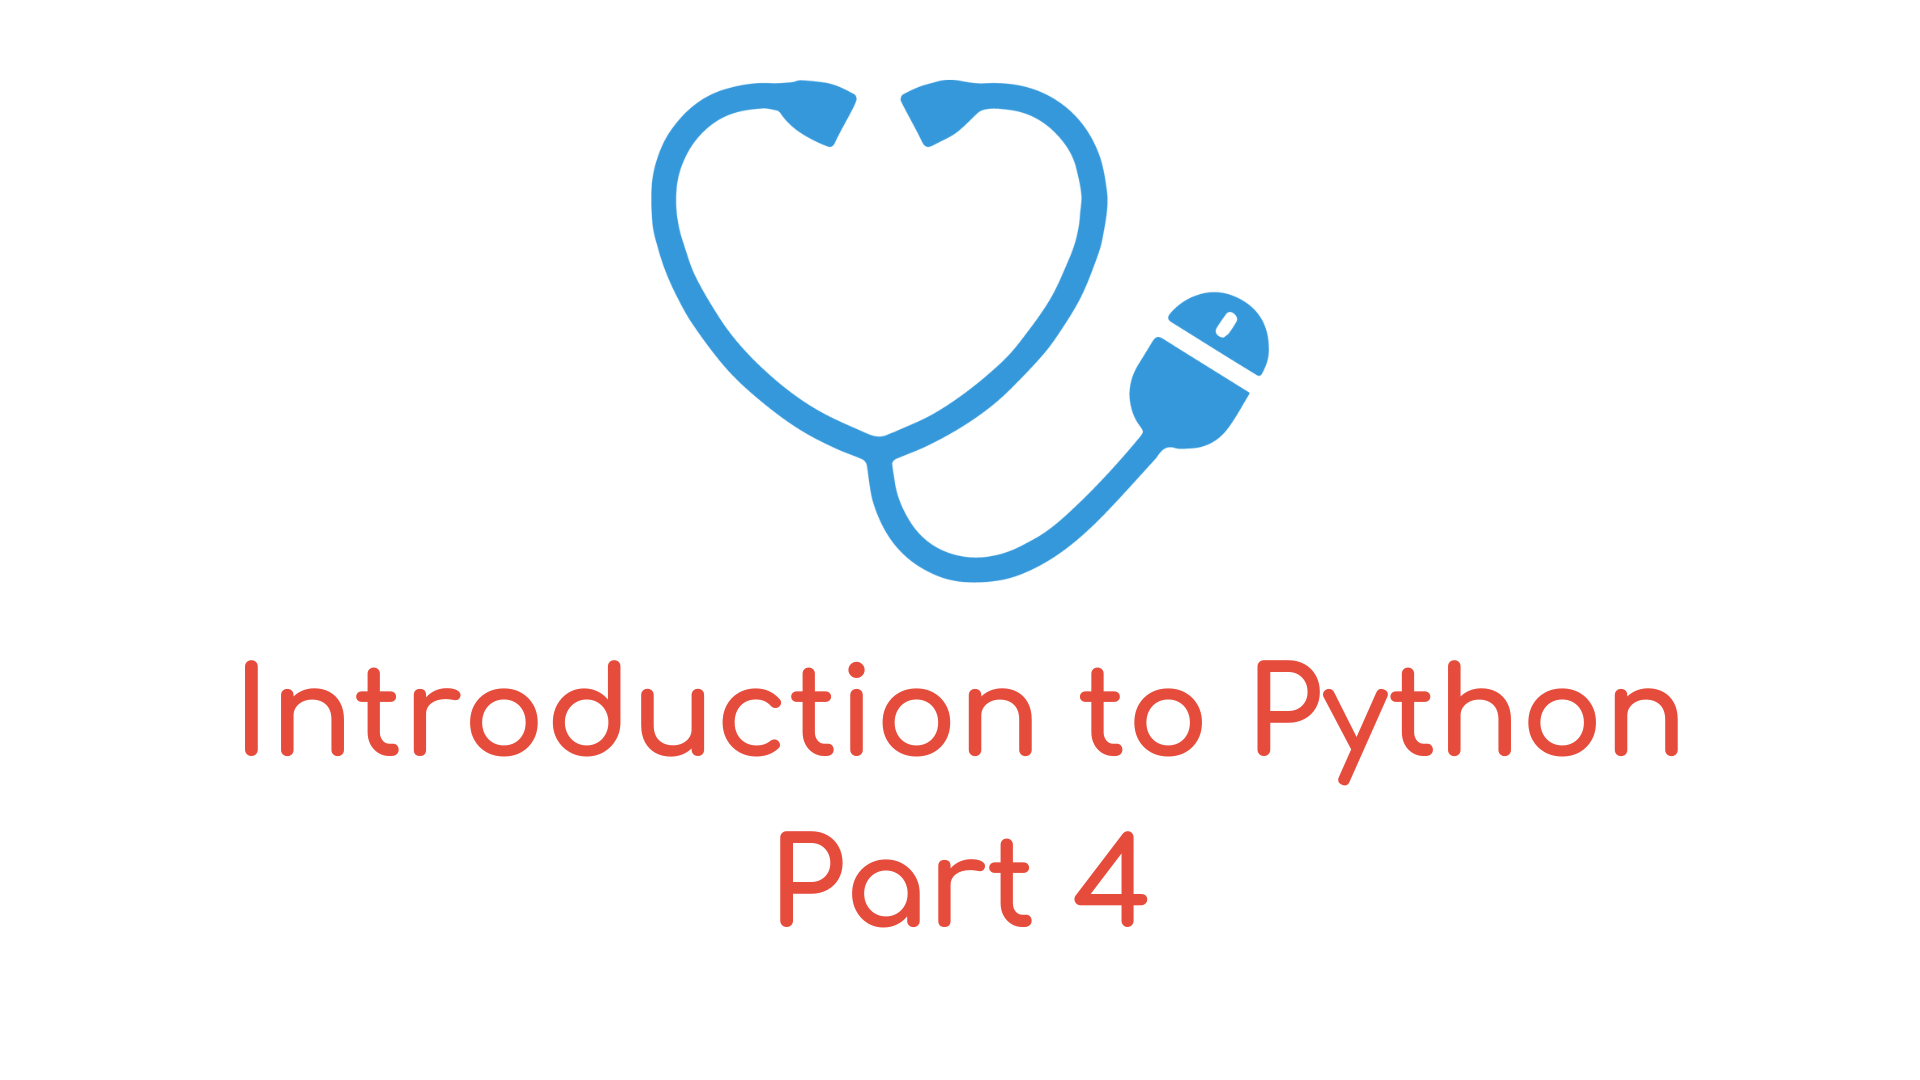 Intro to Python Pt. 4